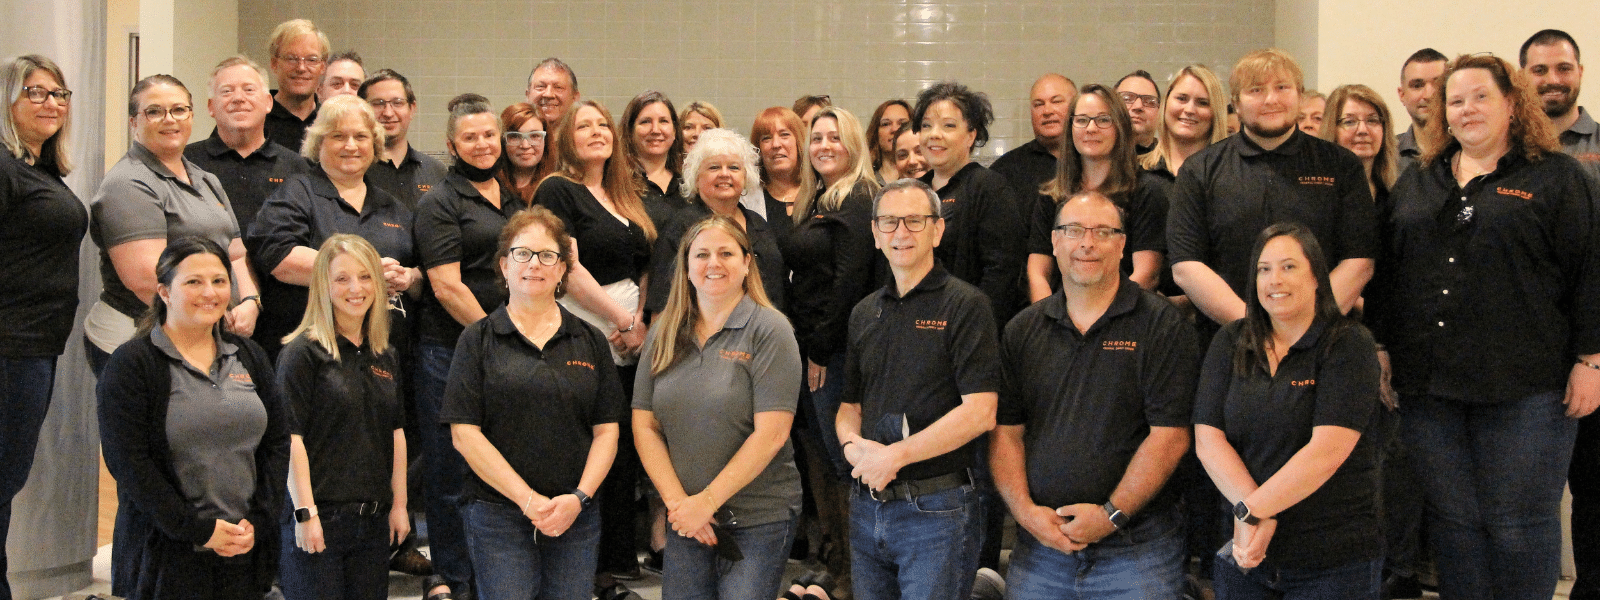 Team photo of CHROME Employees